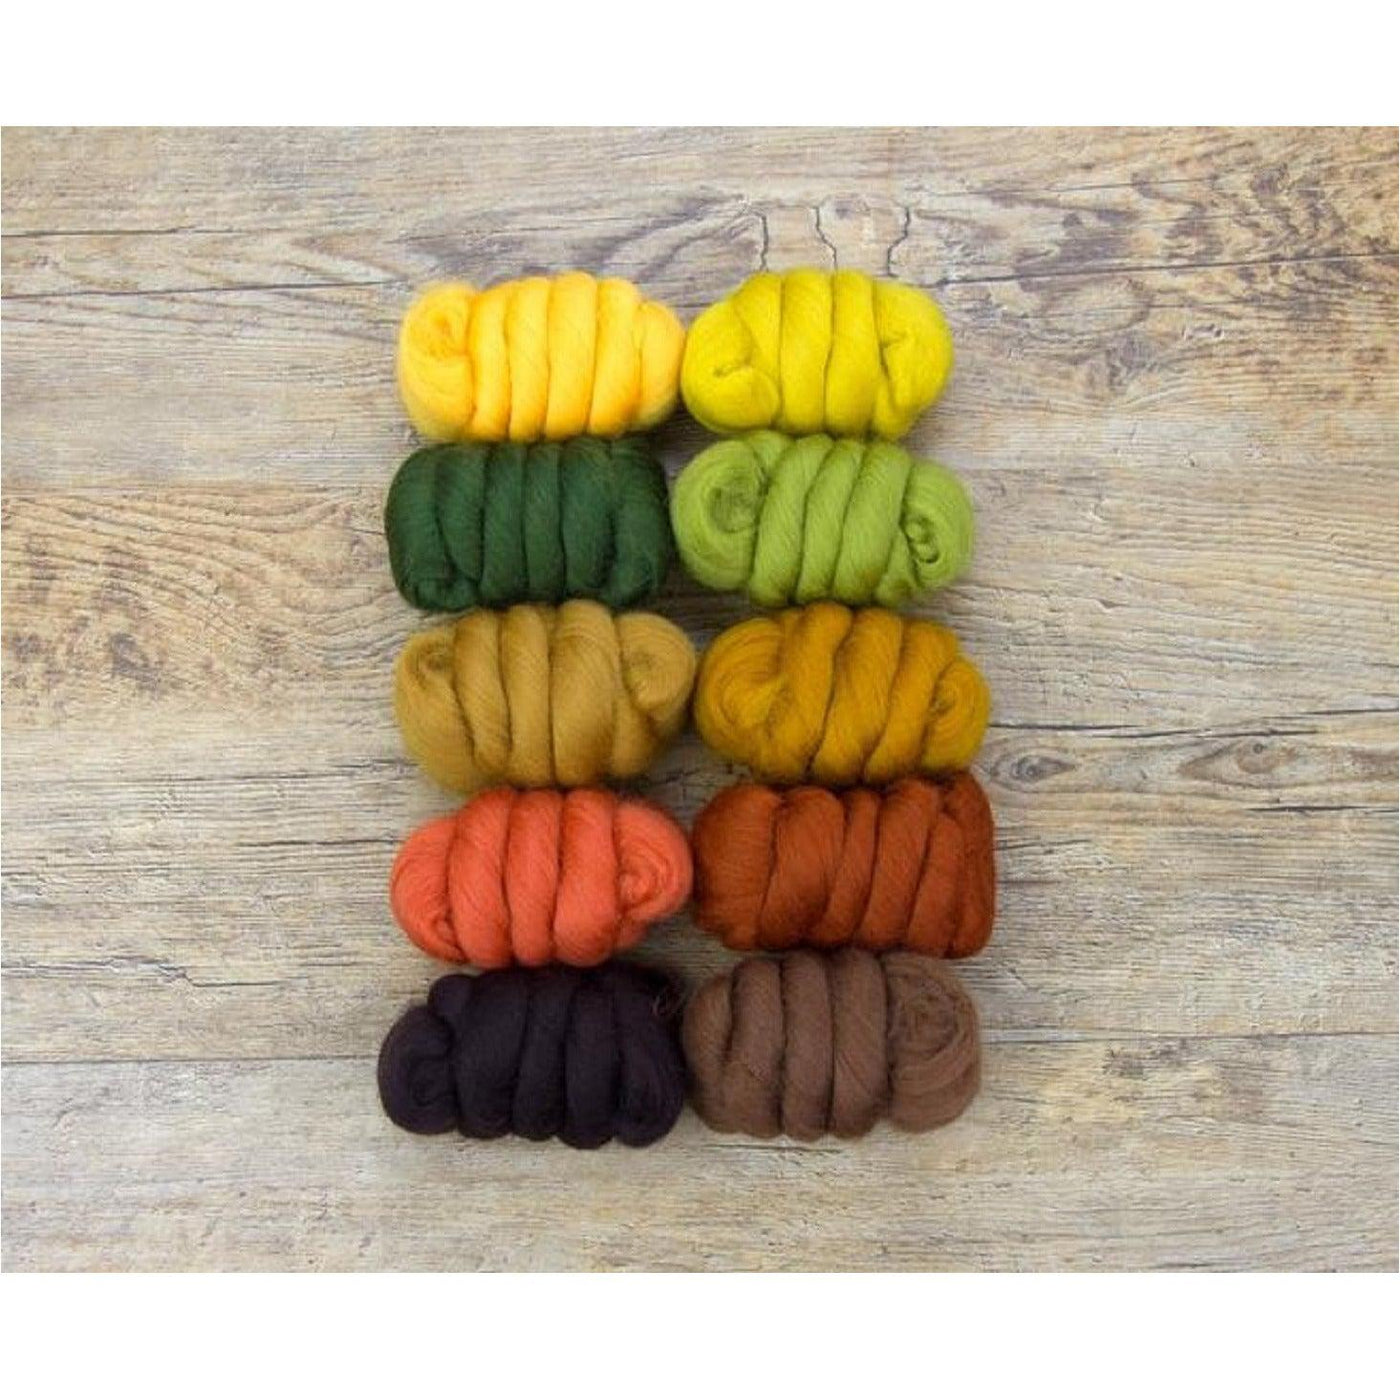 Mixed Merino Wool Variety Pack | Autumn Leaves (Multicolored) 250 Grams, 23 Micron-Wool Roving-Revolution Fibers-Revolution Fibers